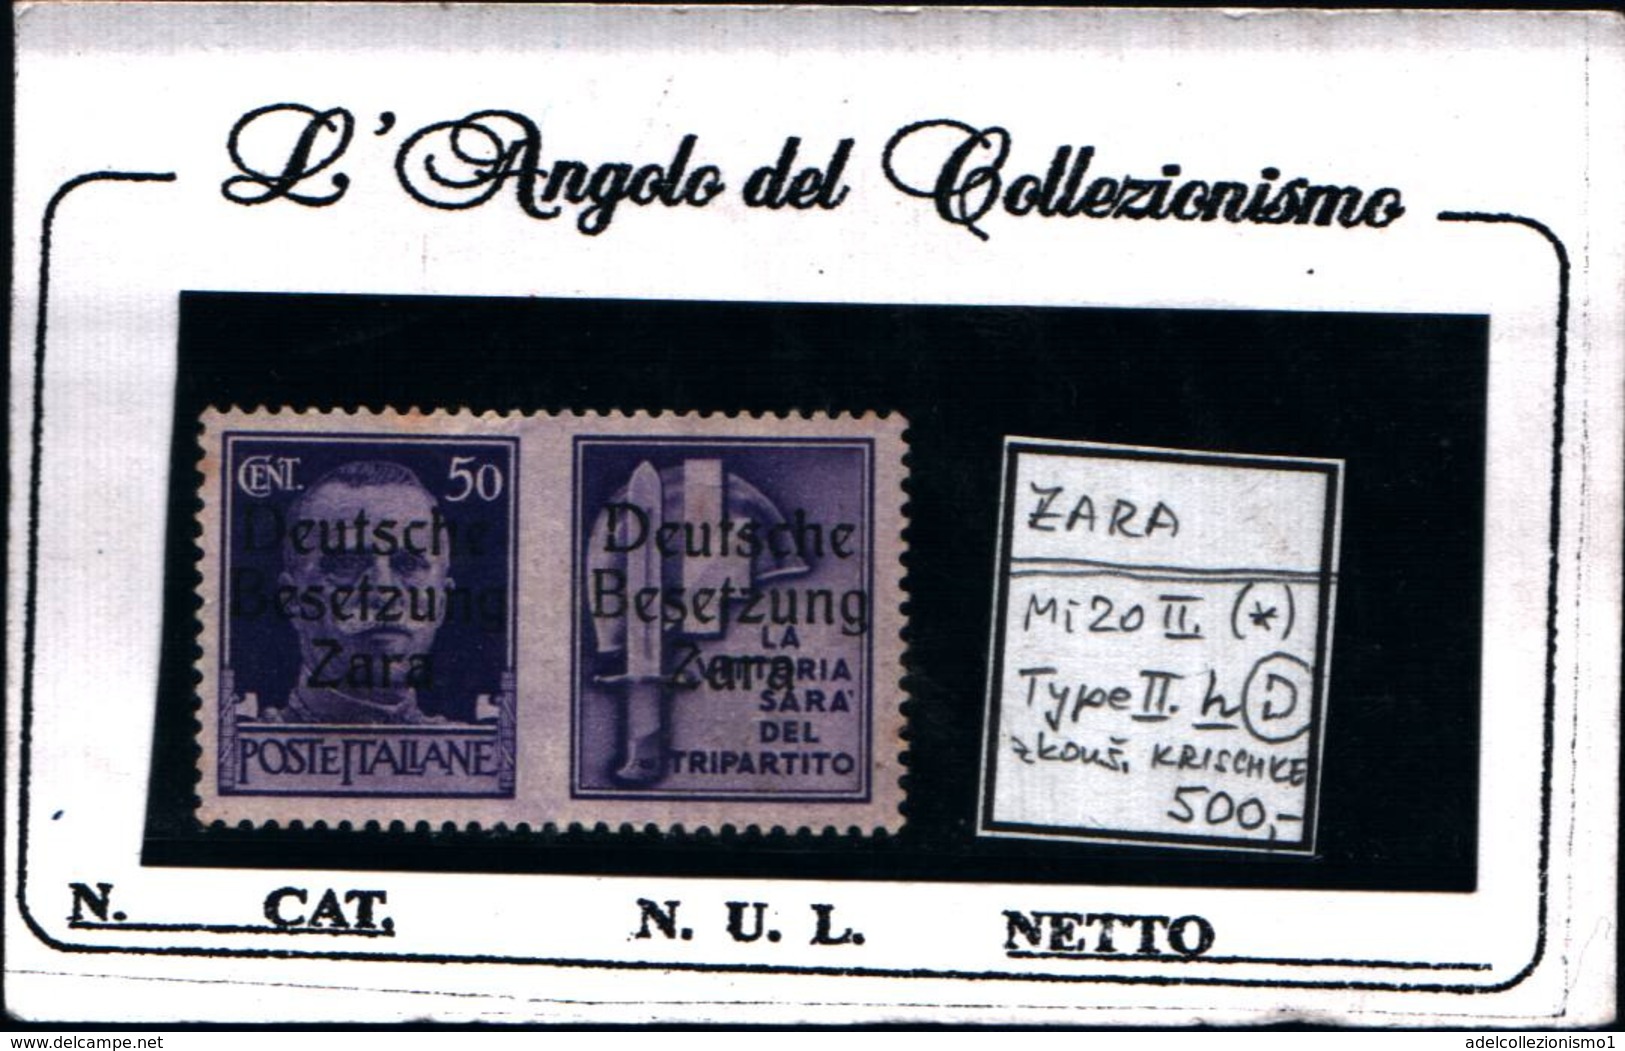 6940B) ITALIA- Zara, 50C. Serie Di Propaganda Sovrastampata - 9 Ottobre 1943-MI 20 II-TYPE II H -FIRMATO SENZA GOMMA - Occ. Allemande: Zara